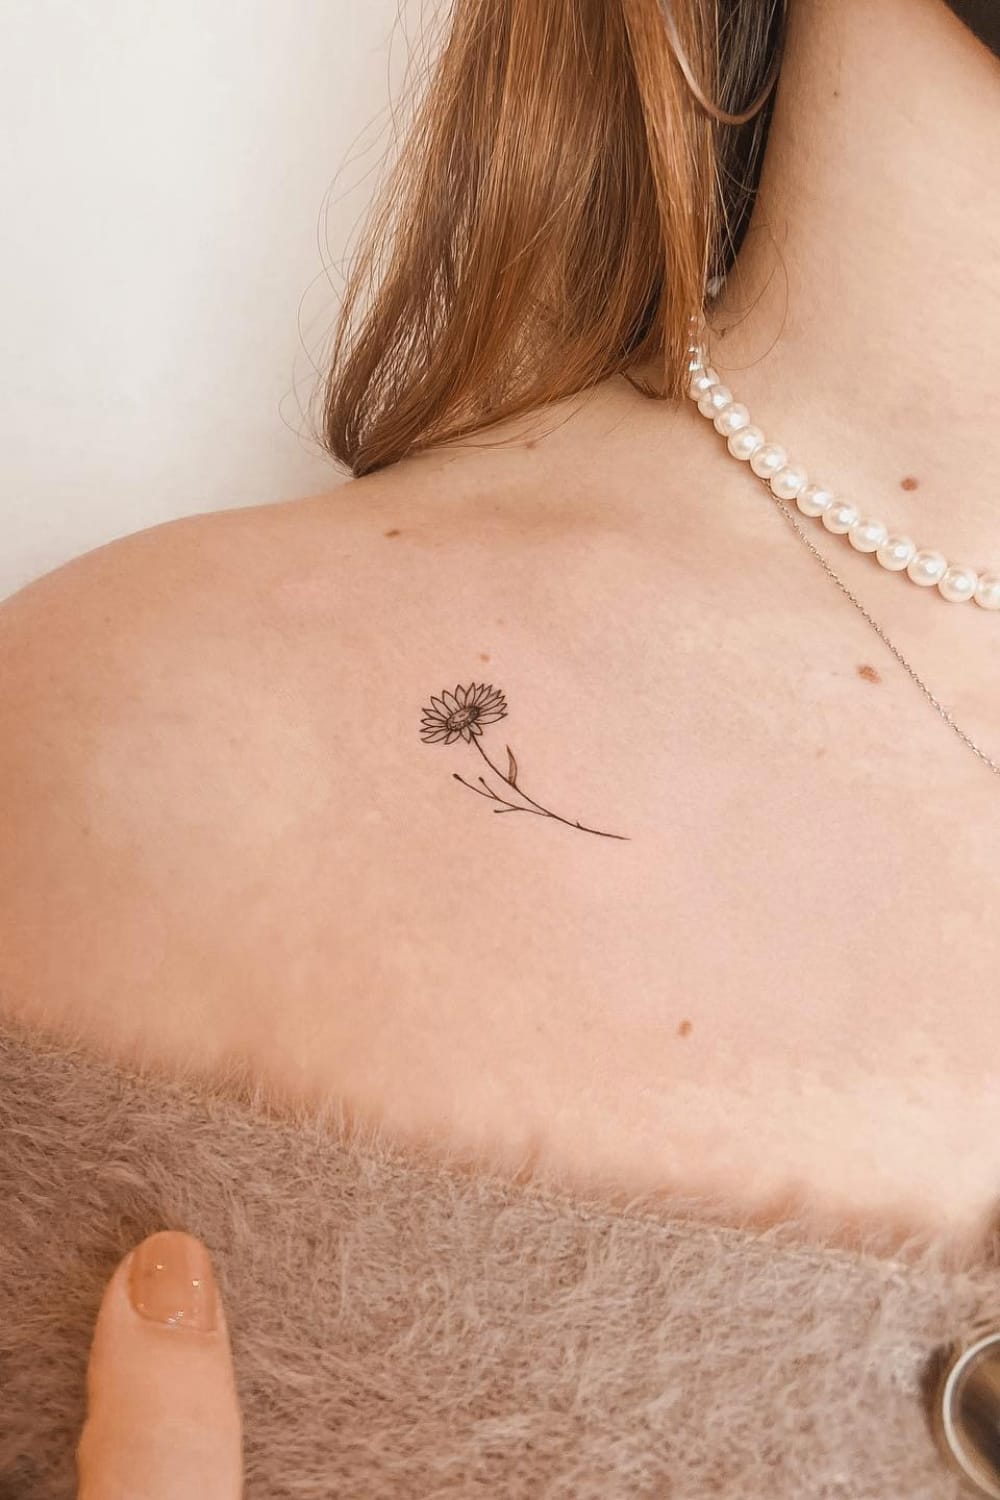 Small sunflower tattoo on collarbone